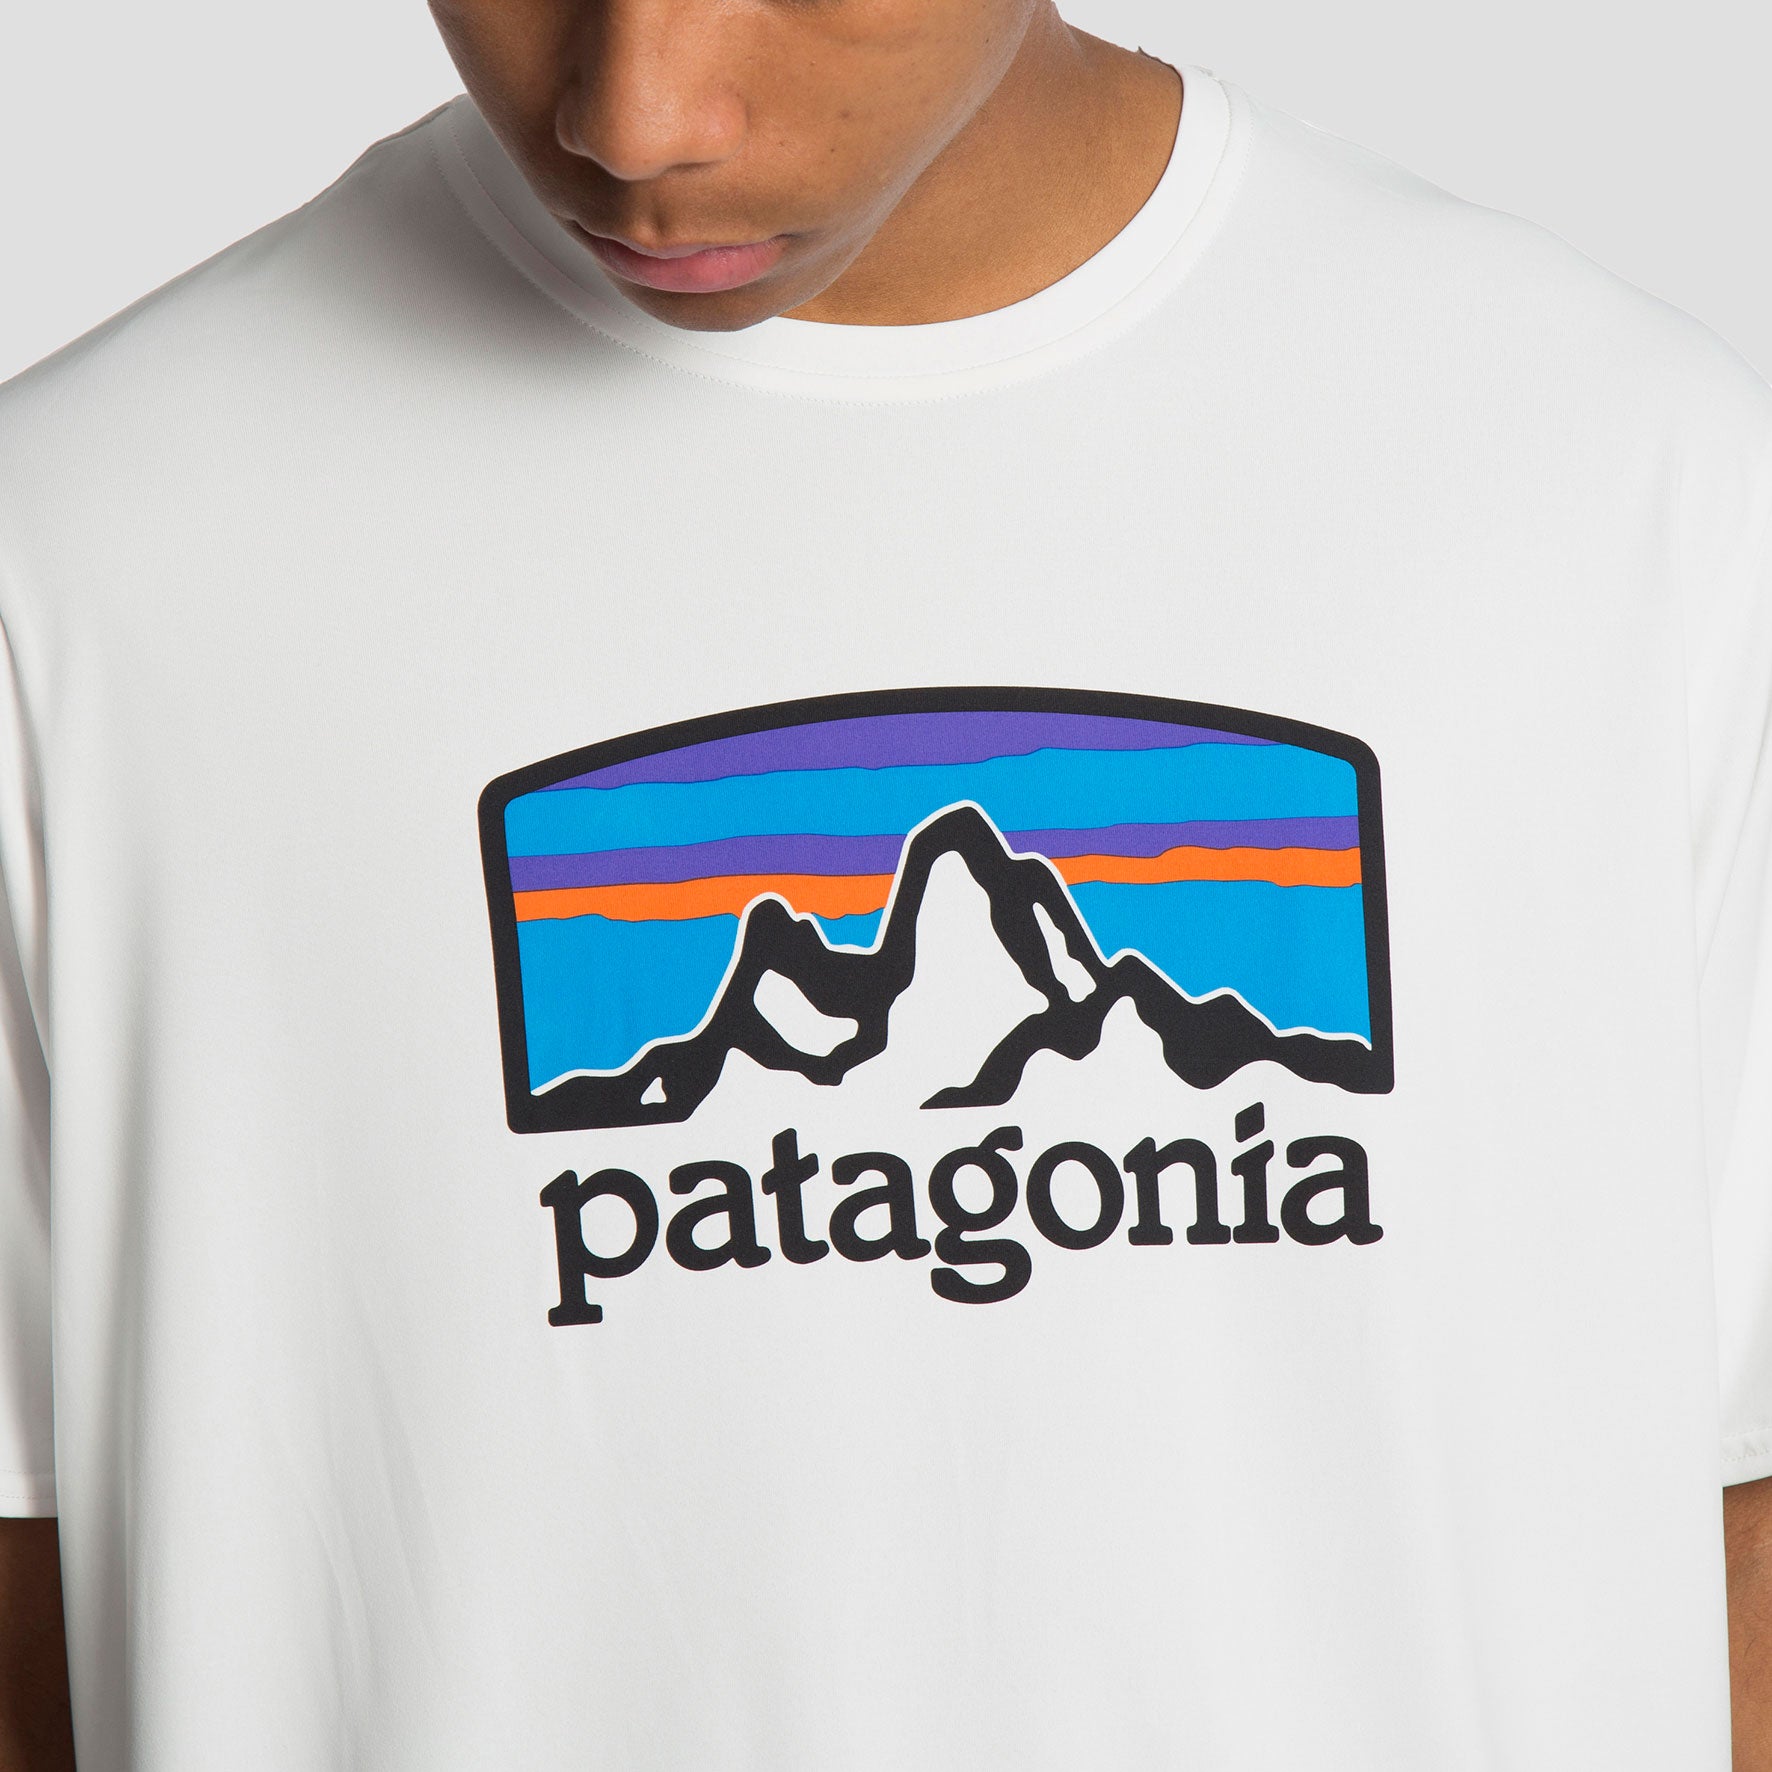 Patagonia Camiseta Fitz Roy Horizons - 45235FHWH - Colección Chico